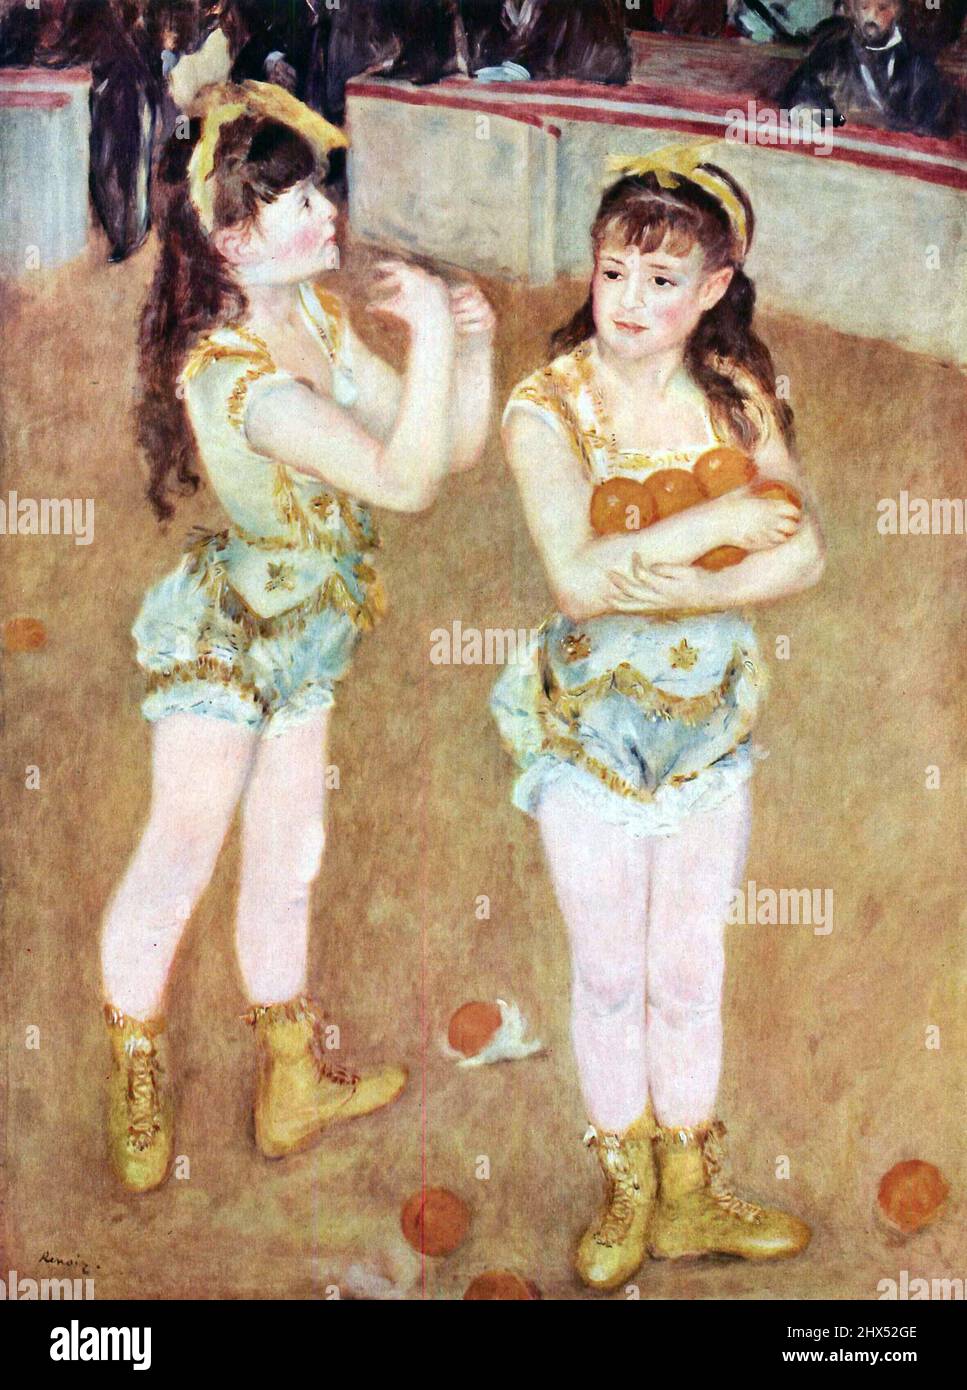 Auguste Renoir; acrobati al Cirque Fernando (Francisca e Angelina Wartenberg) (1879), im Zirkus Fernando, 皮埃尔-奥古斯特·雷诺阿, 在馬戲團, W cirku, Circo au Foto Stock